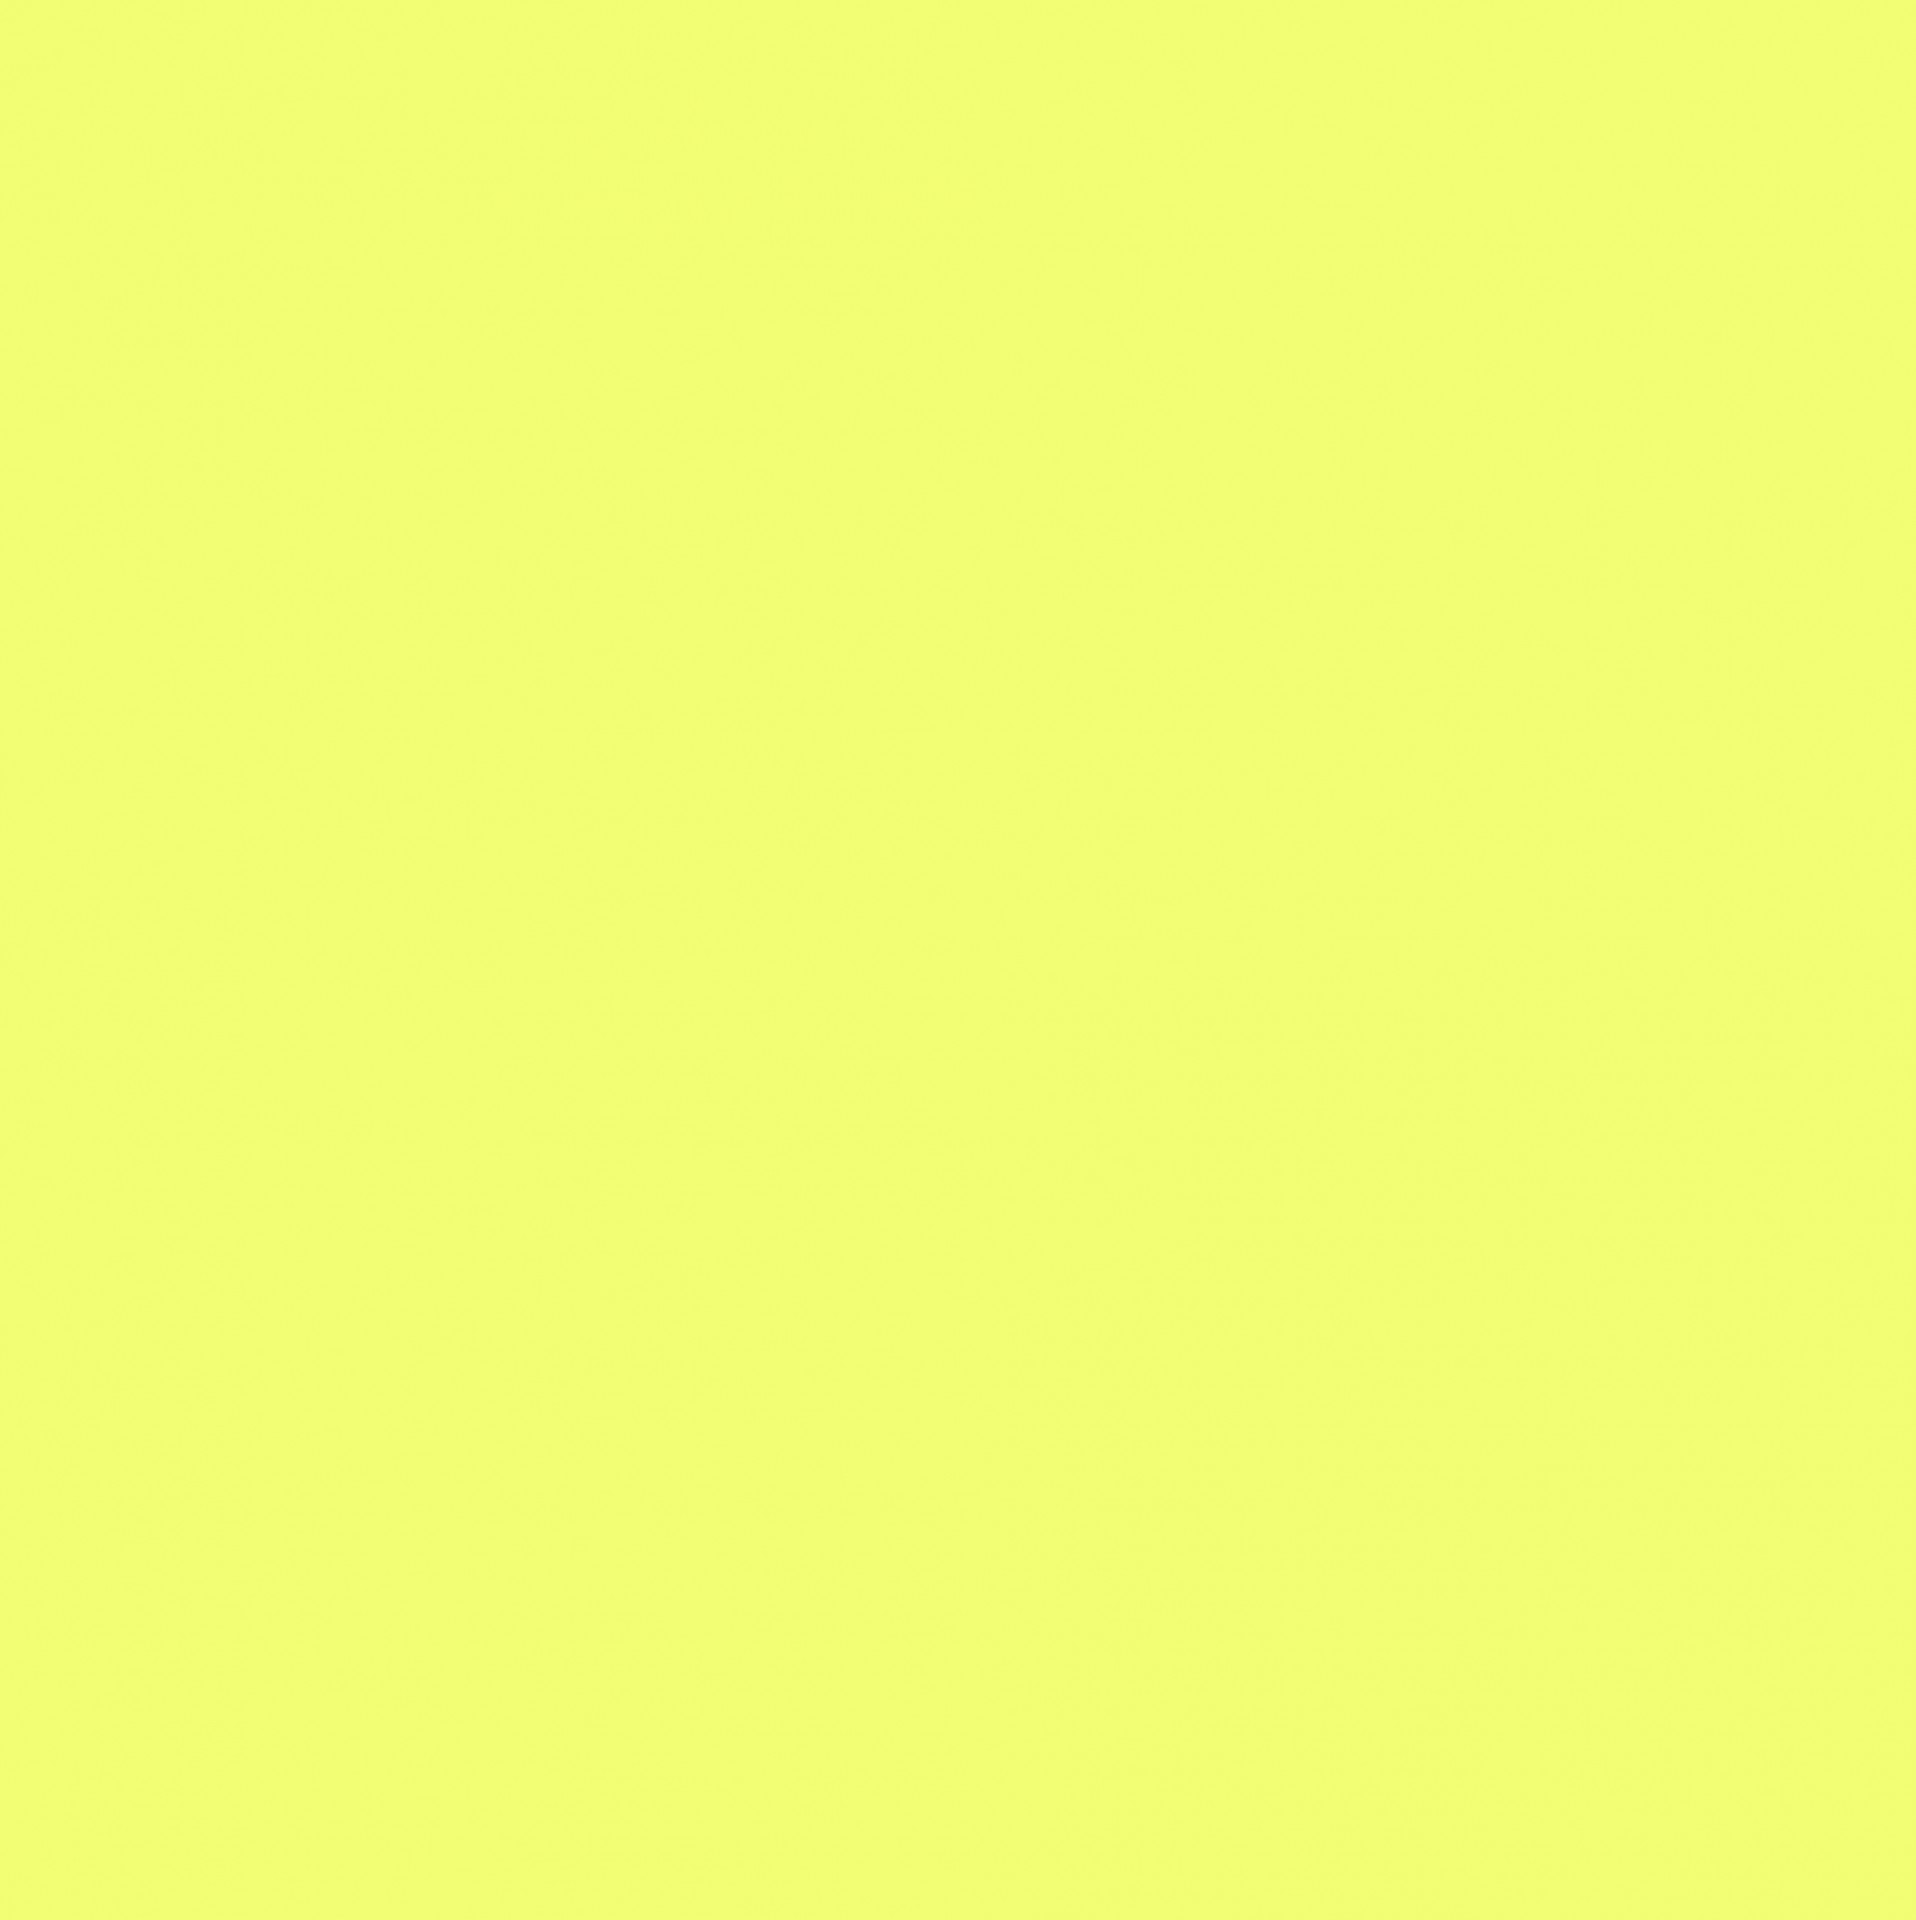 yellow light yellow background free photo